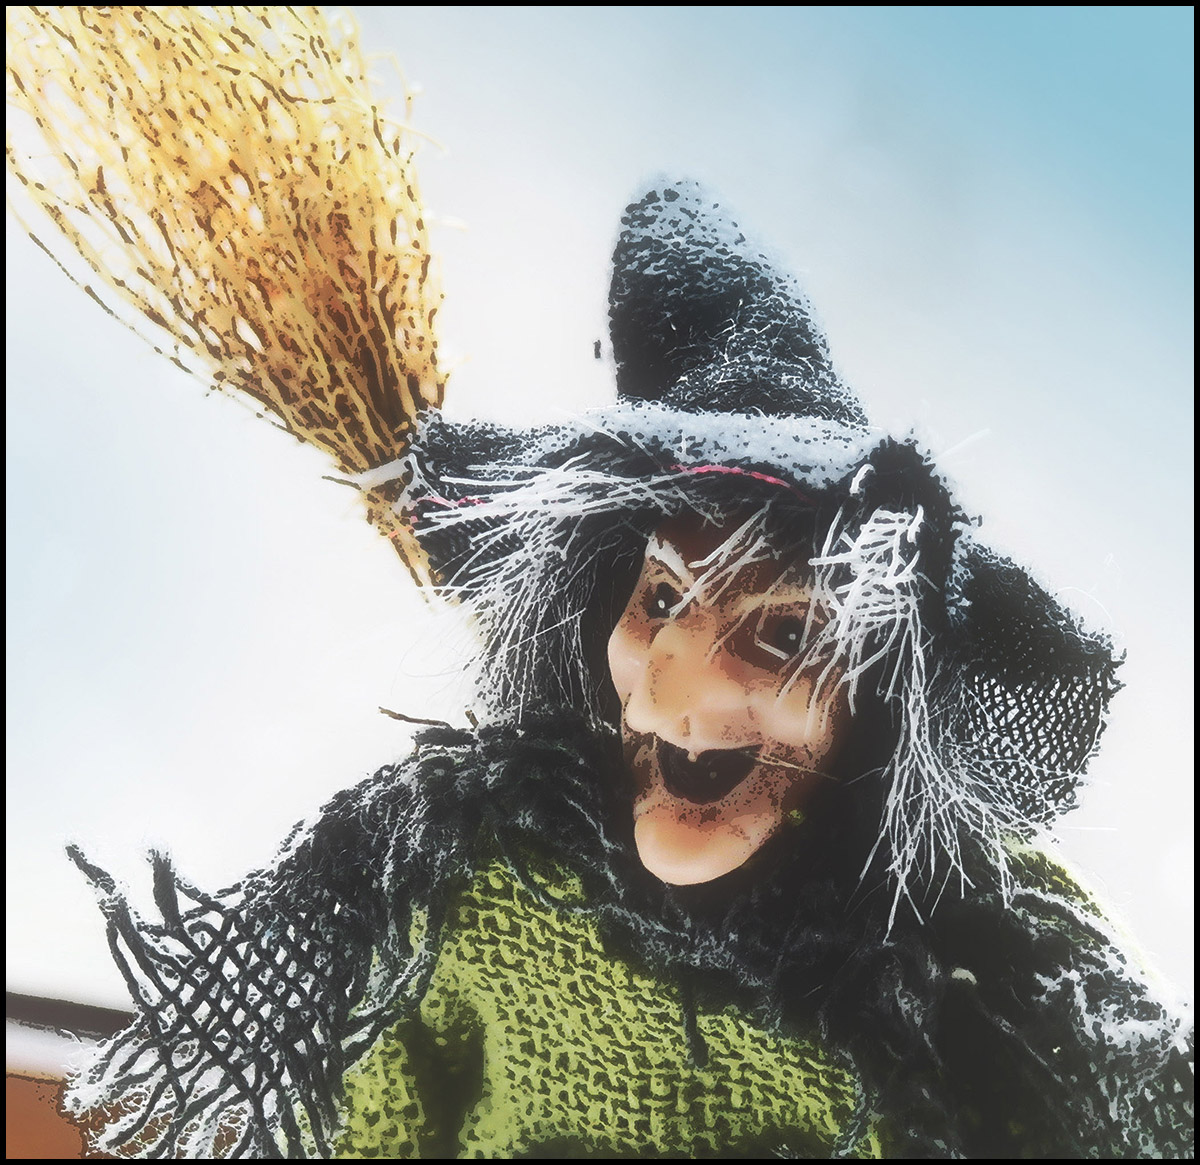 Meet 'La Befana' – Italy's Good Witch of Christmas!